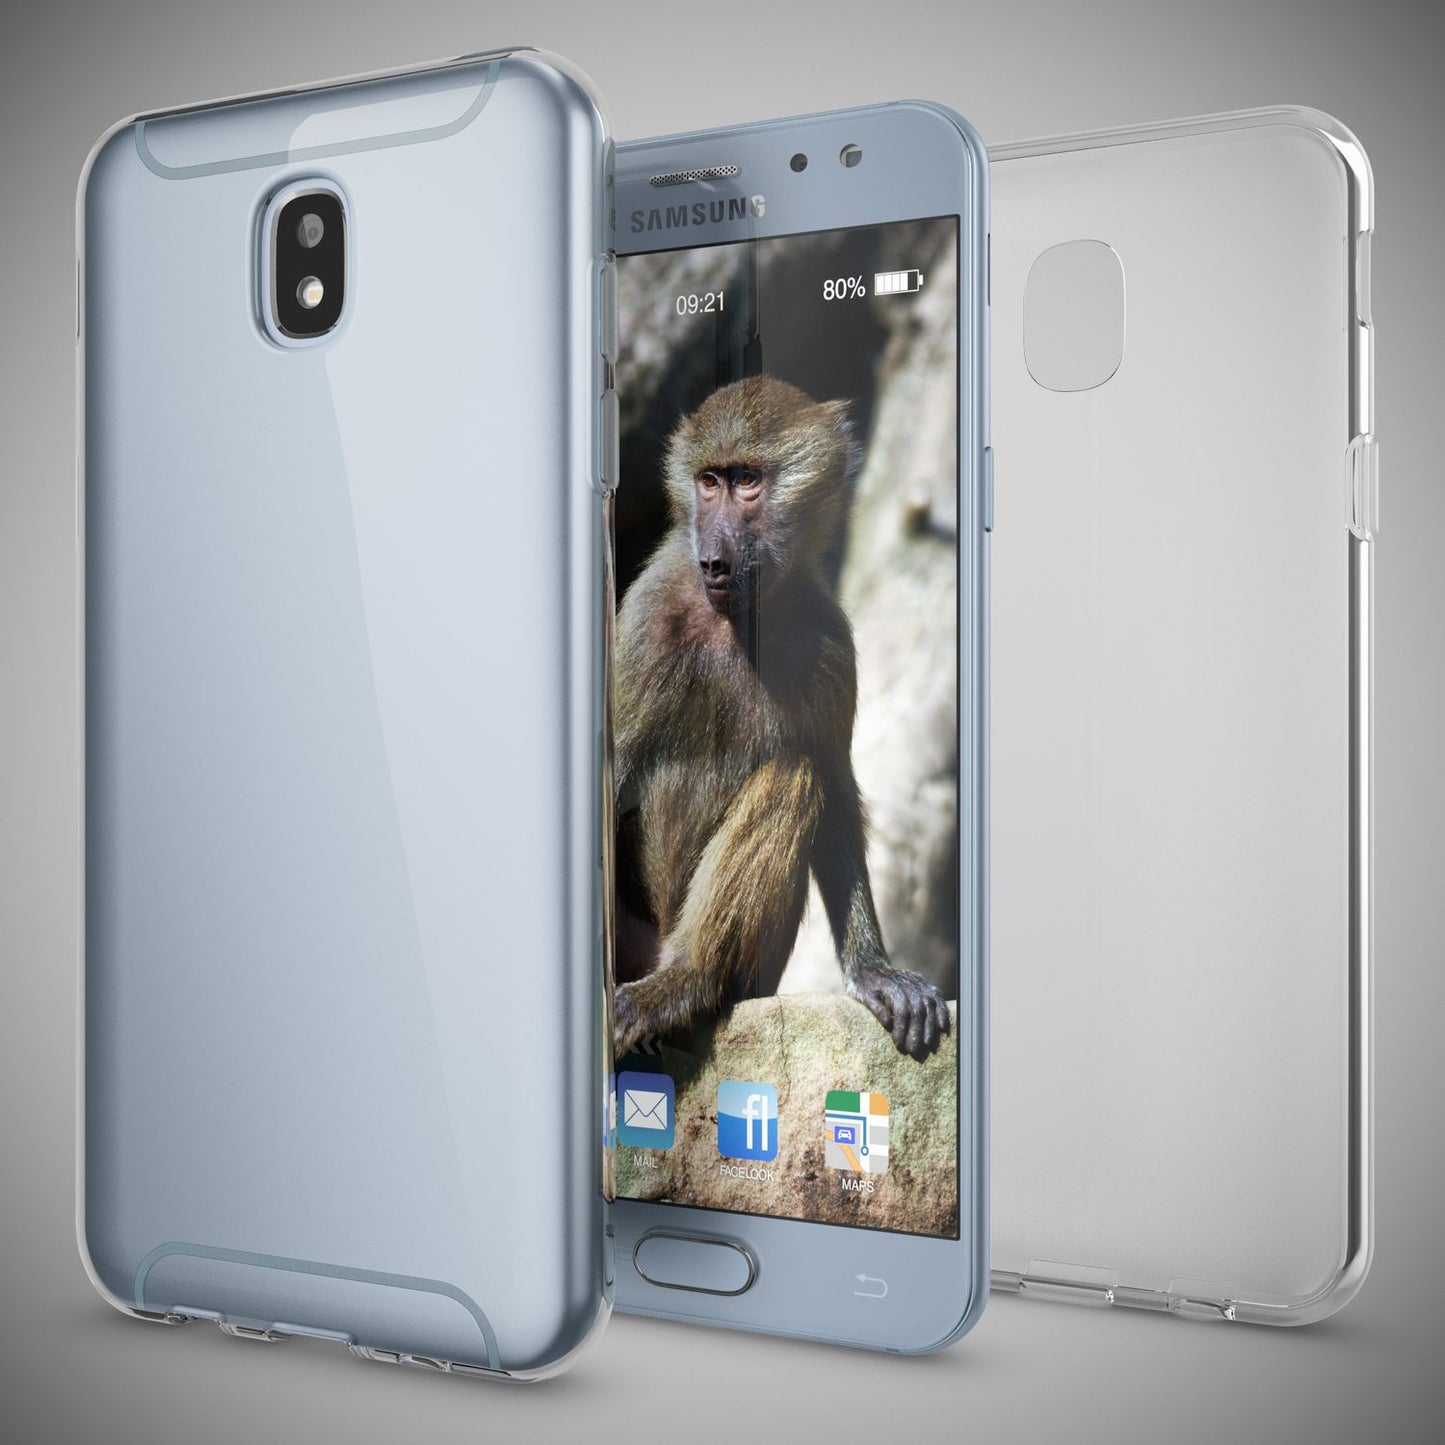 Samsung Galaxy J7 2017 (EU-Modell) Handy Hülle von NALIA, TPU Silikon Case Cover